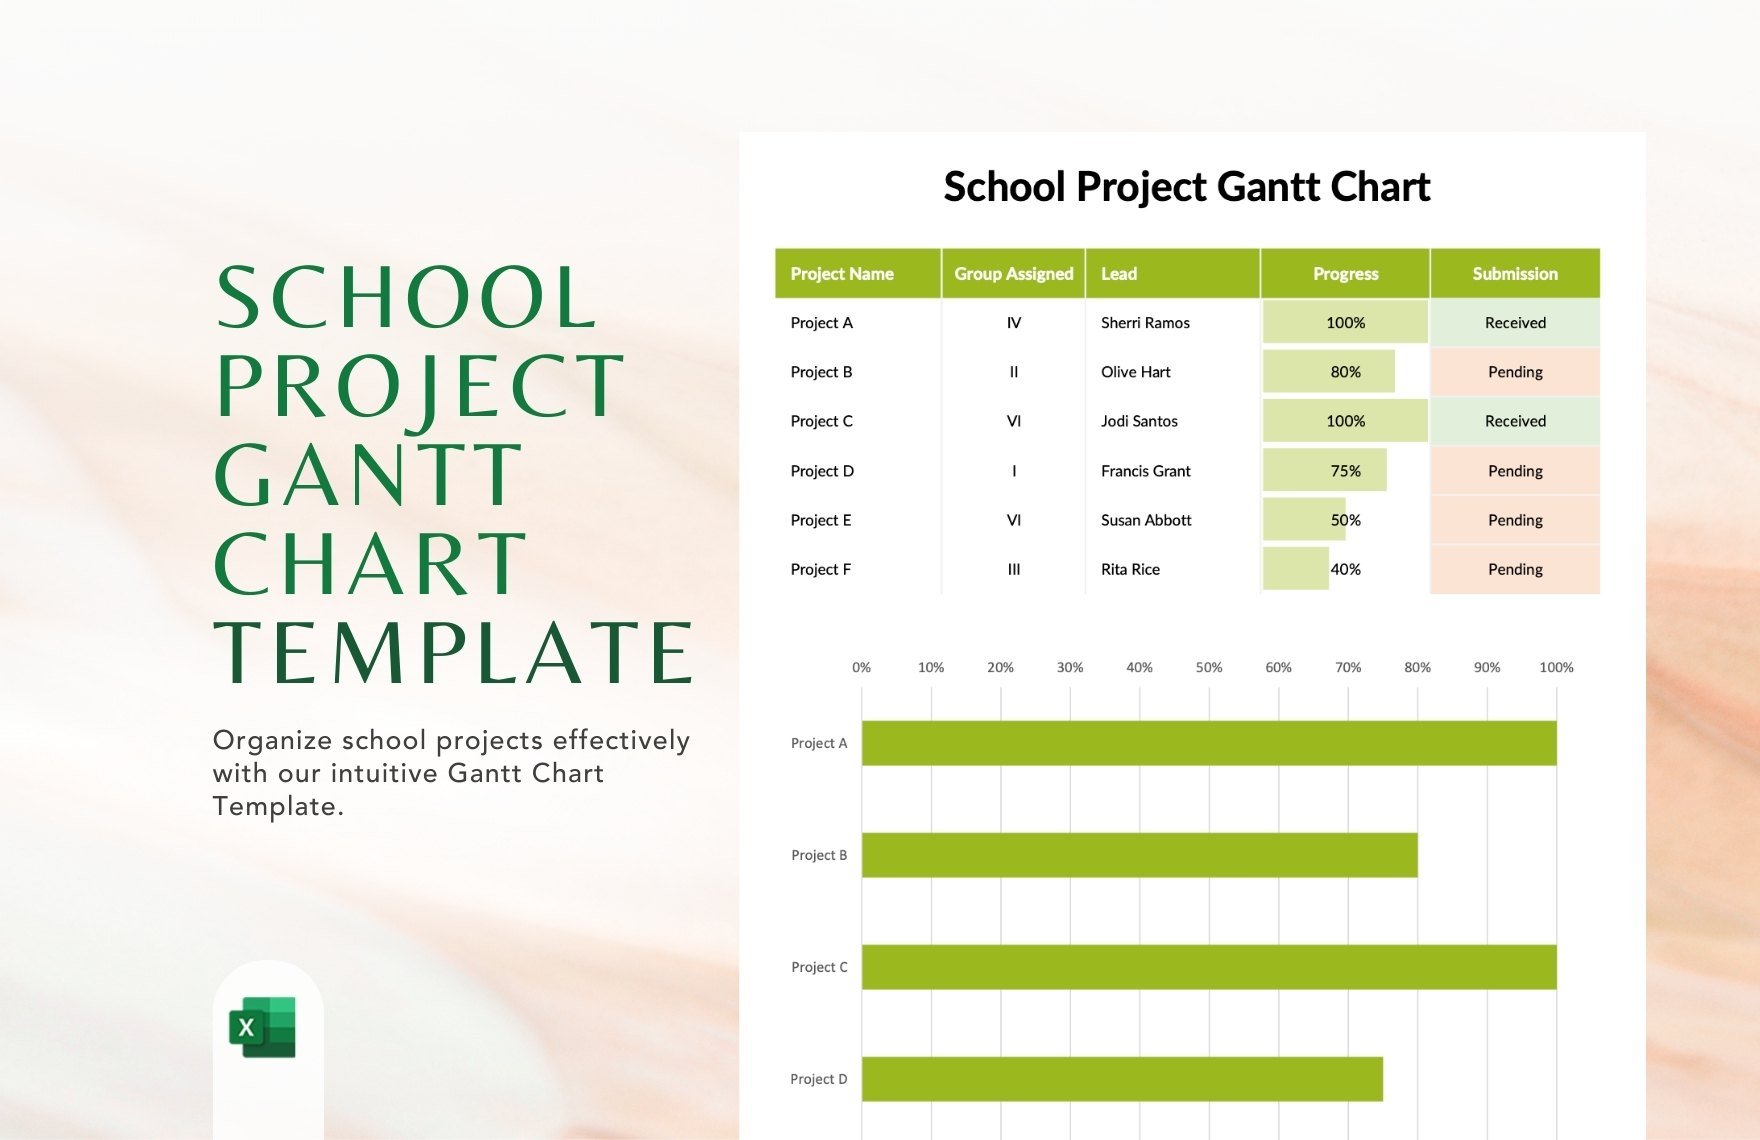 School Project Gantt Chart Template in Excel